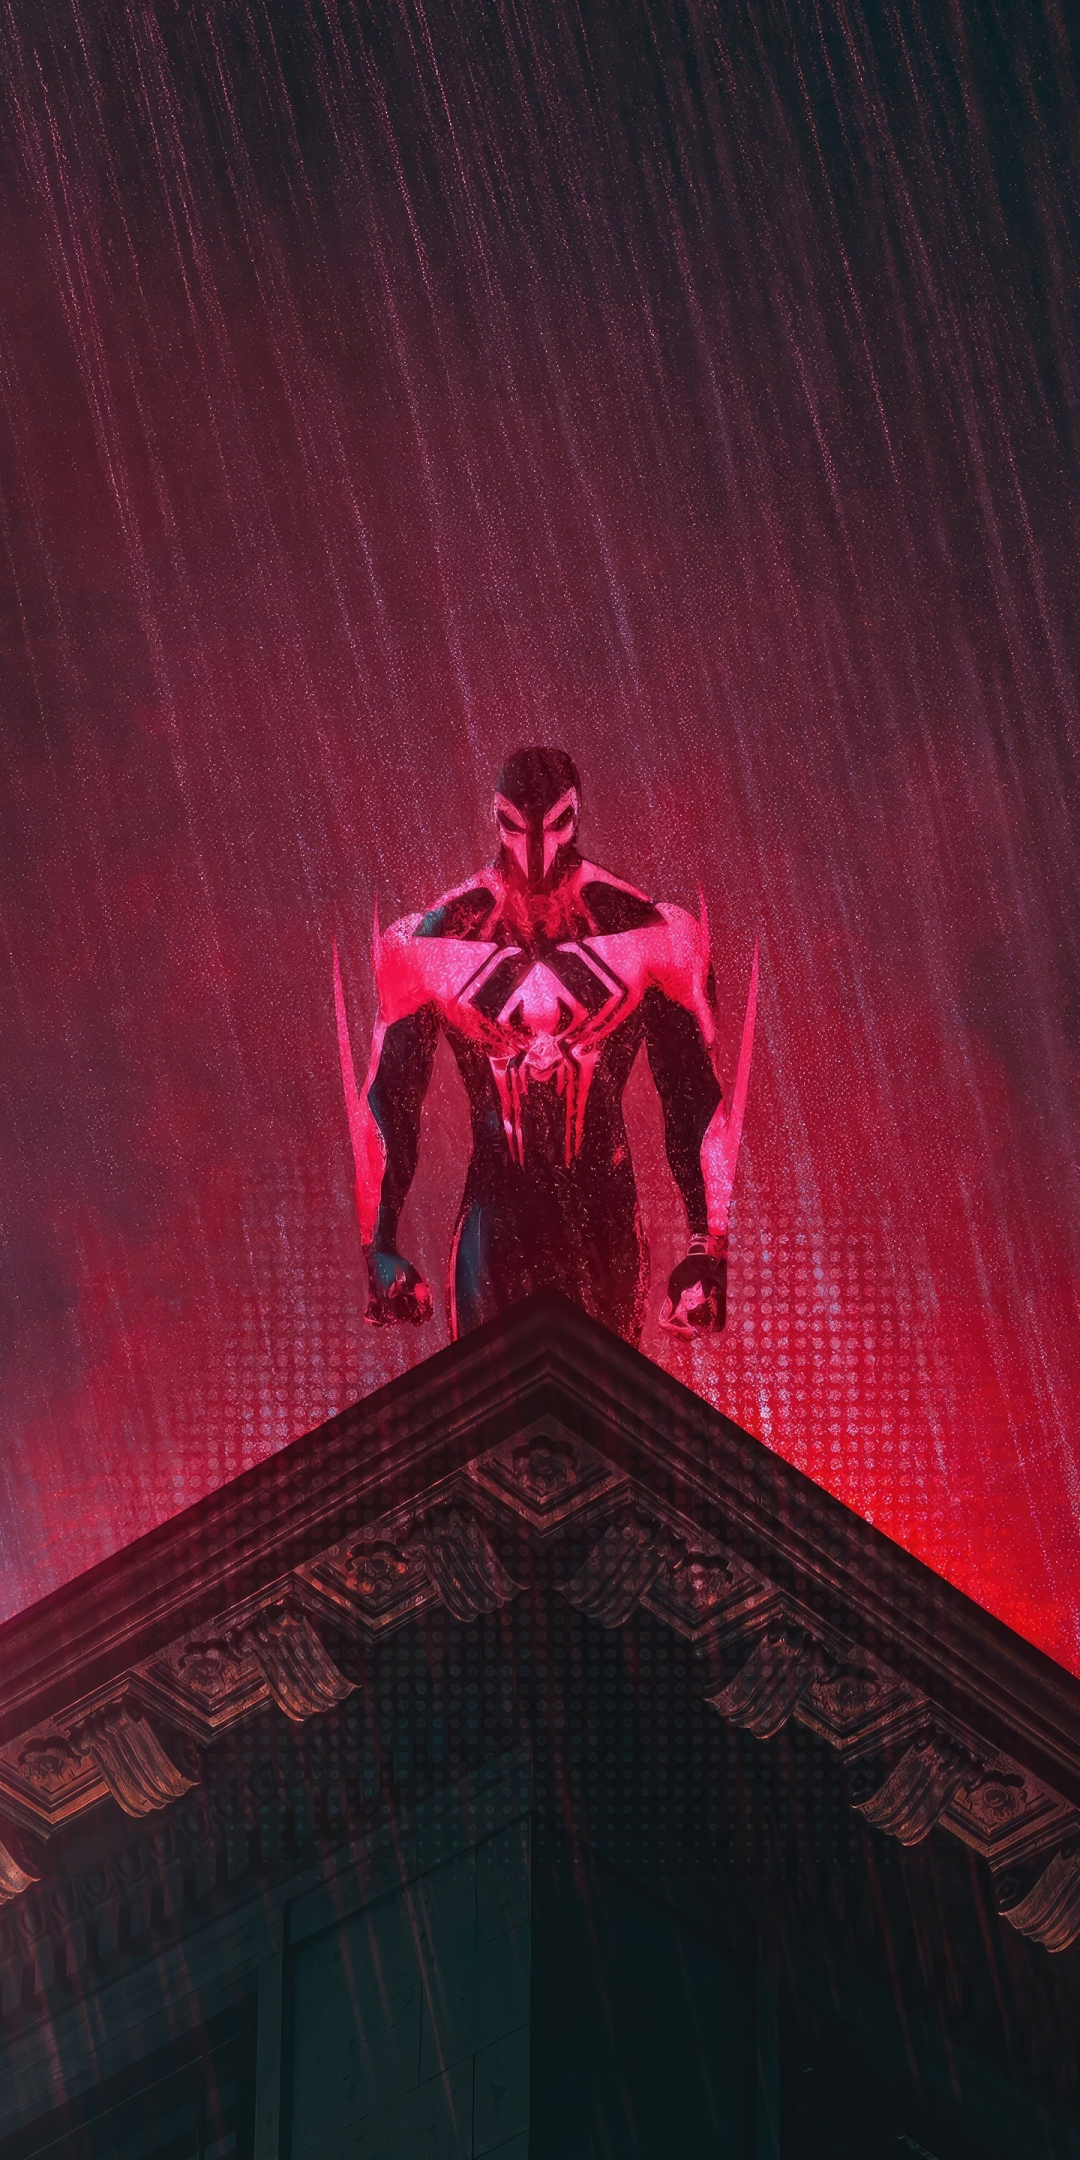 Miguel O'hara, spider-man 2099, into the rain, 1080x2160 wallpaper